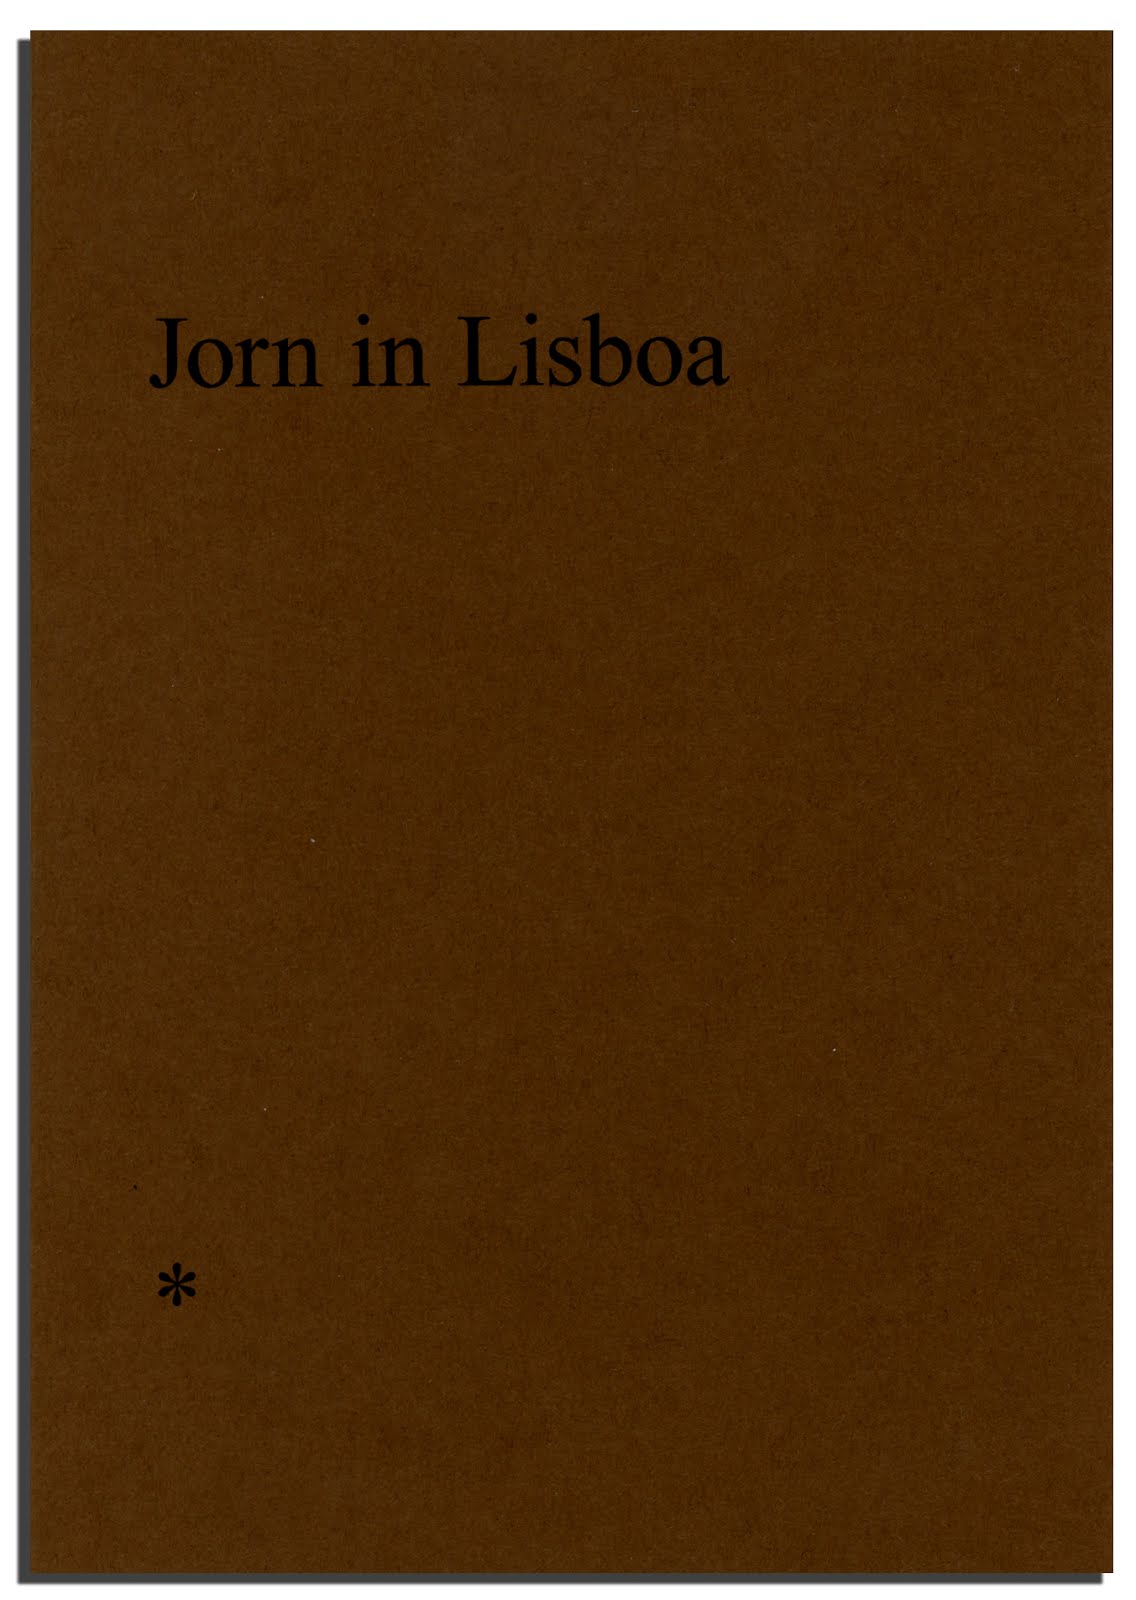 Jorn in Lisboa